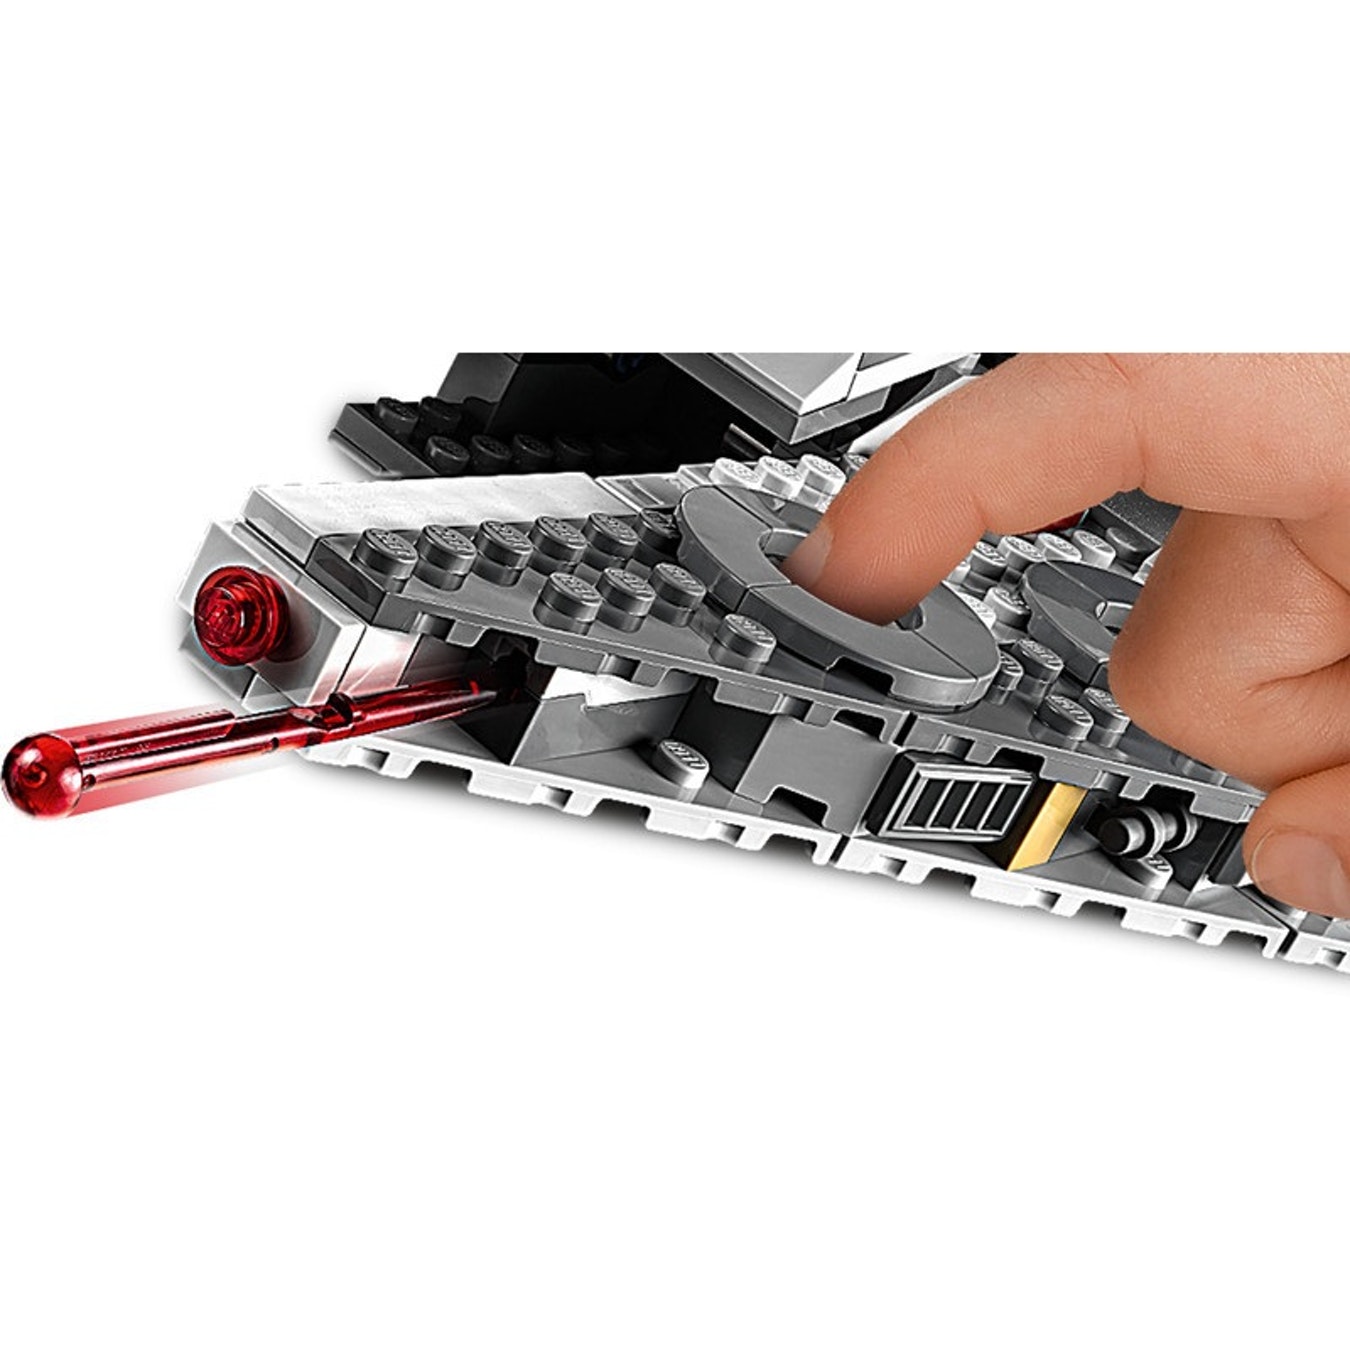 LEGO Star Wars - Tusindårsfalken (75257)